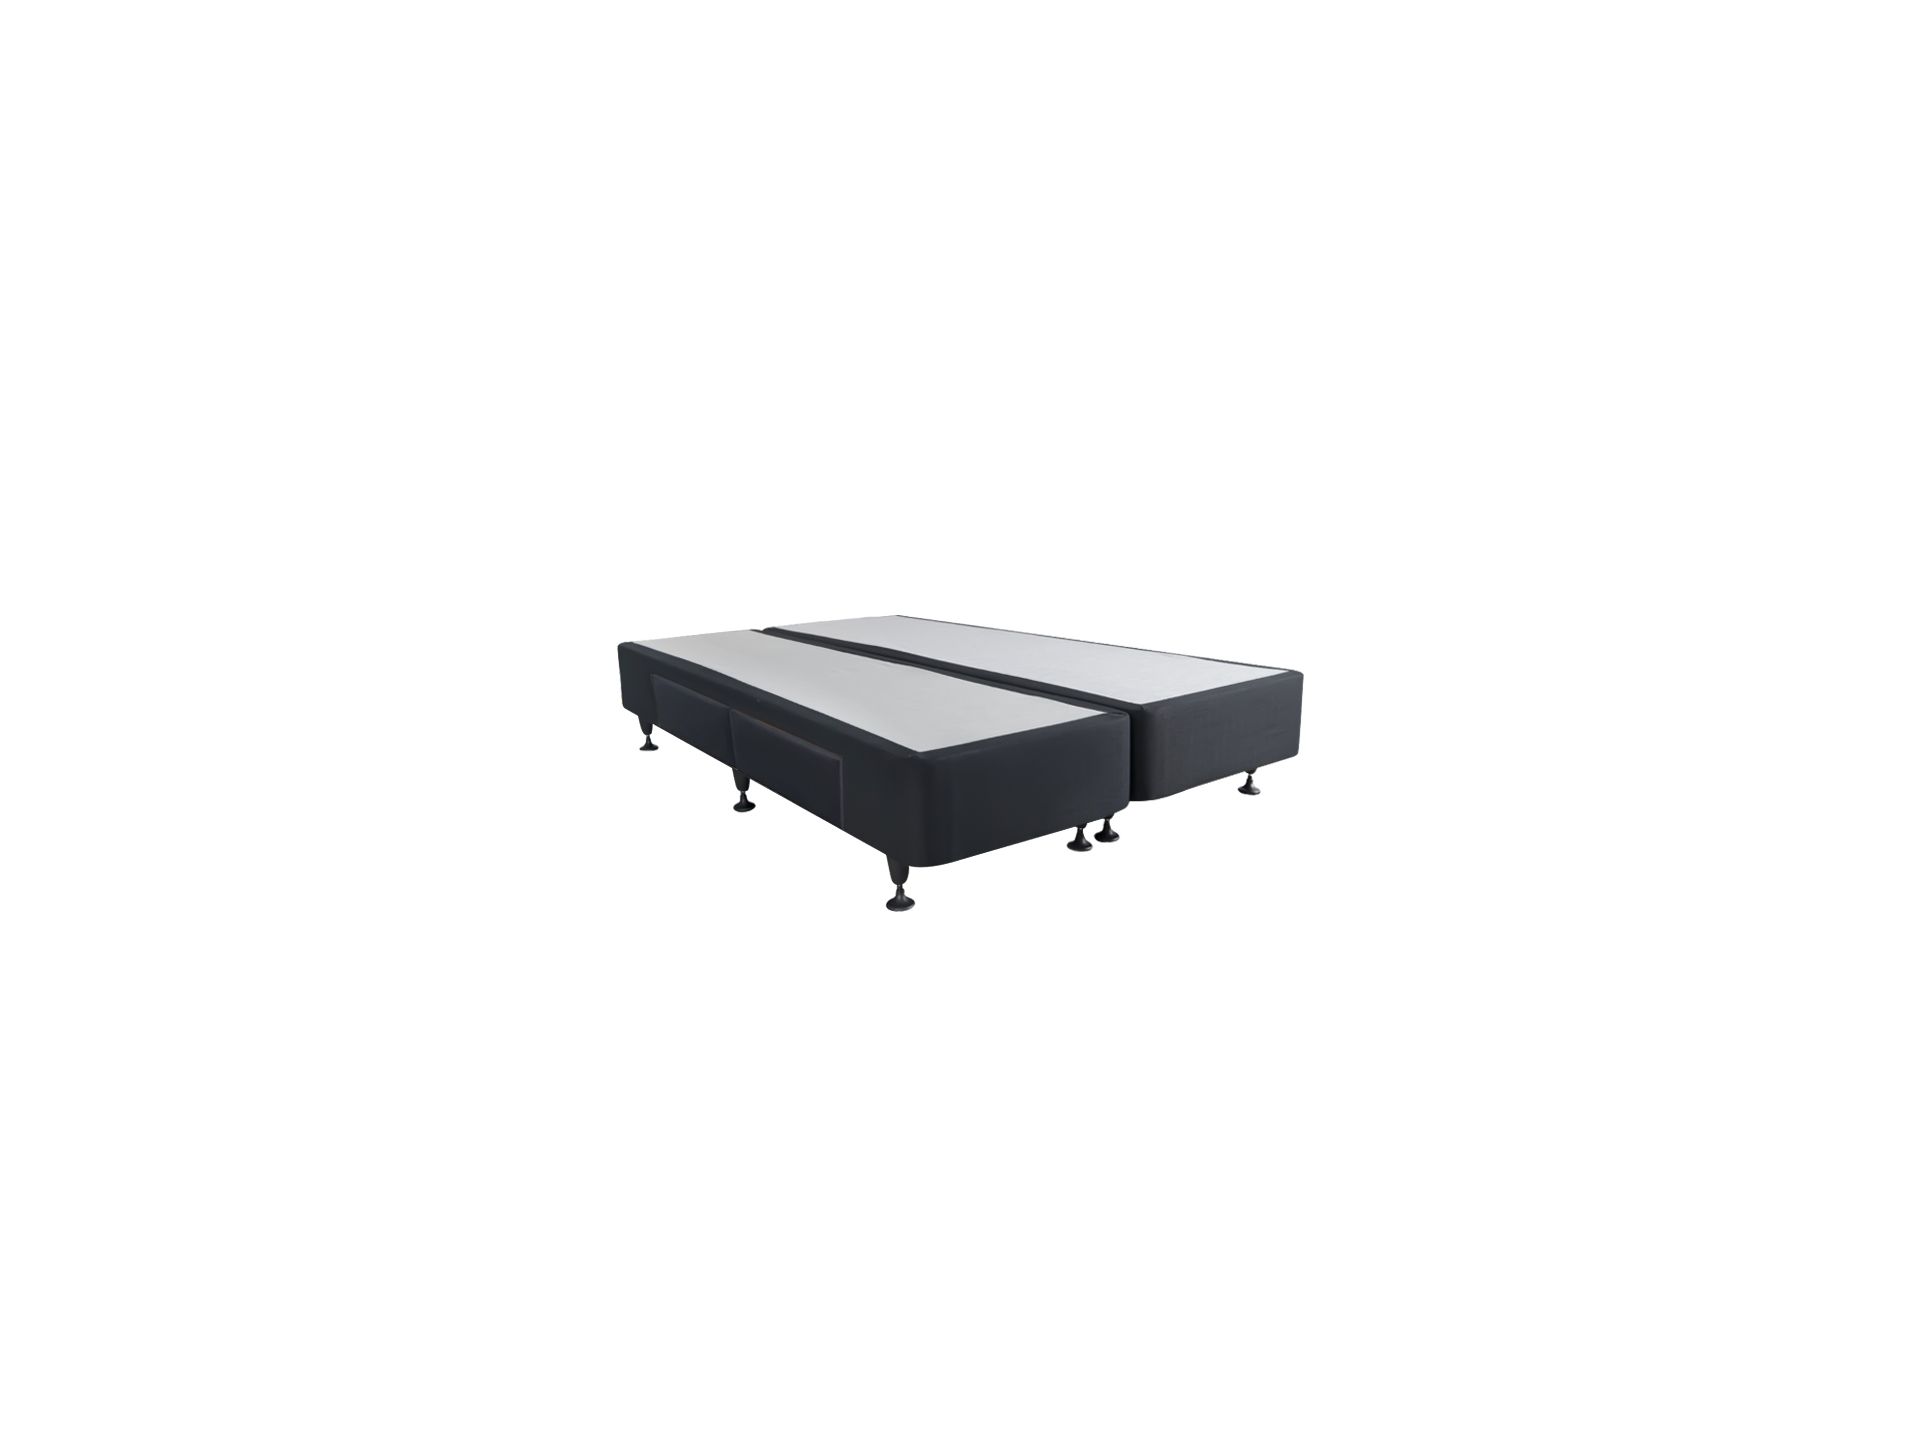 Charles Fabric Super King Split Bed Base 4 Drawers - Black